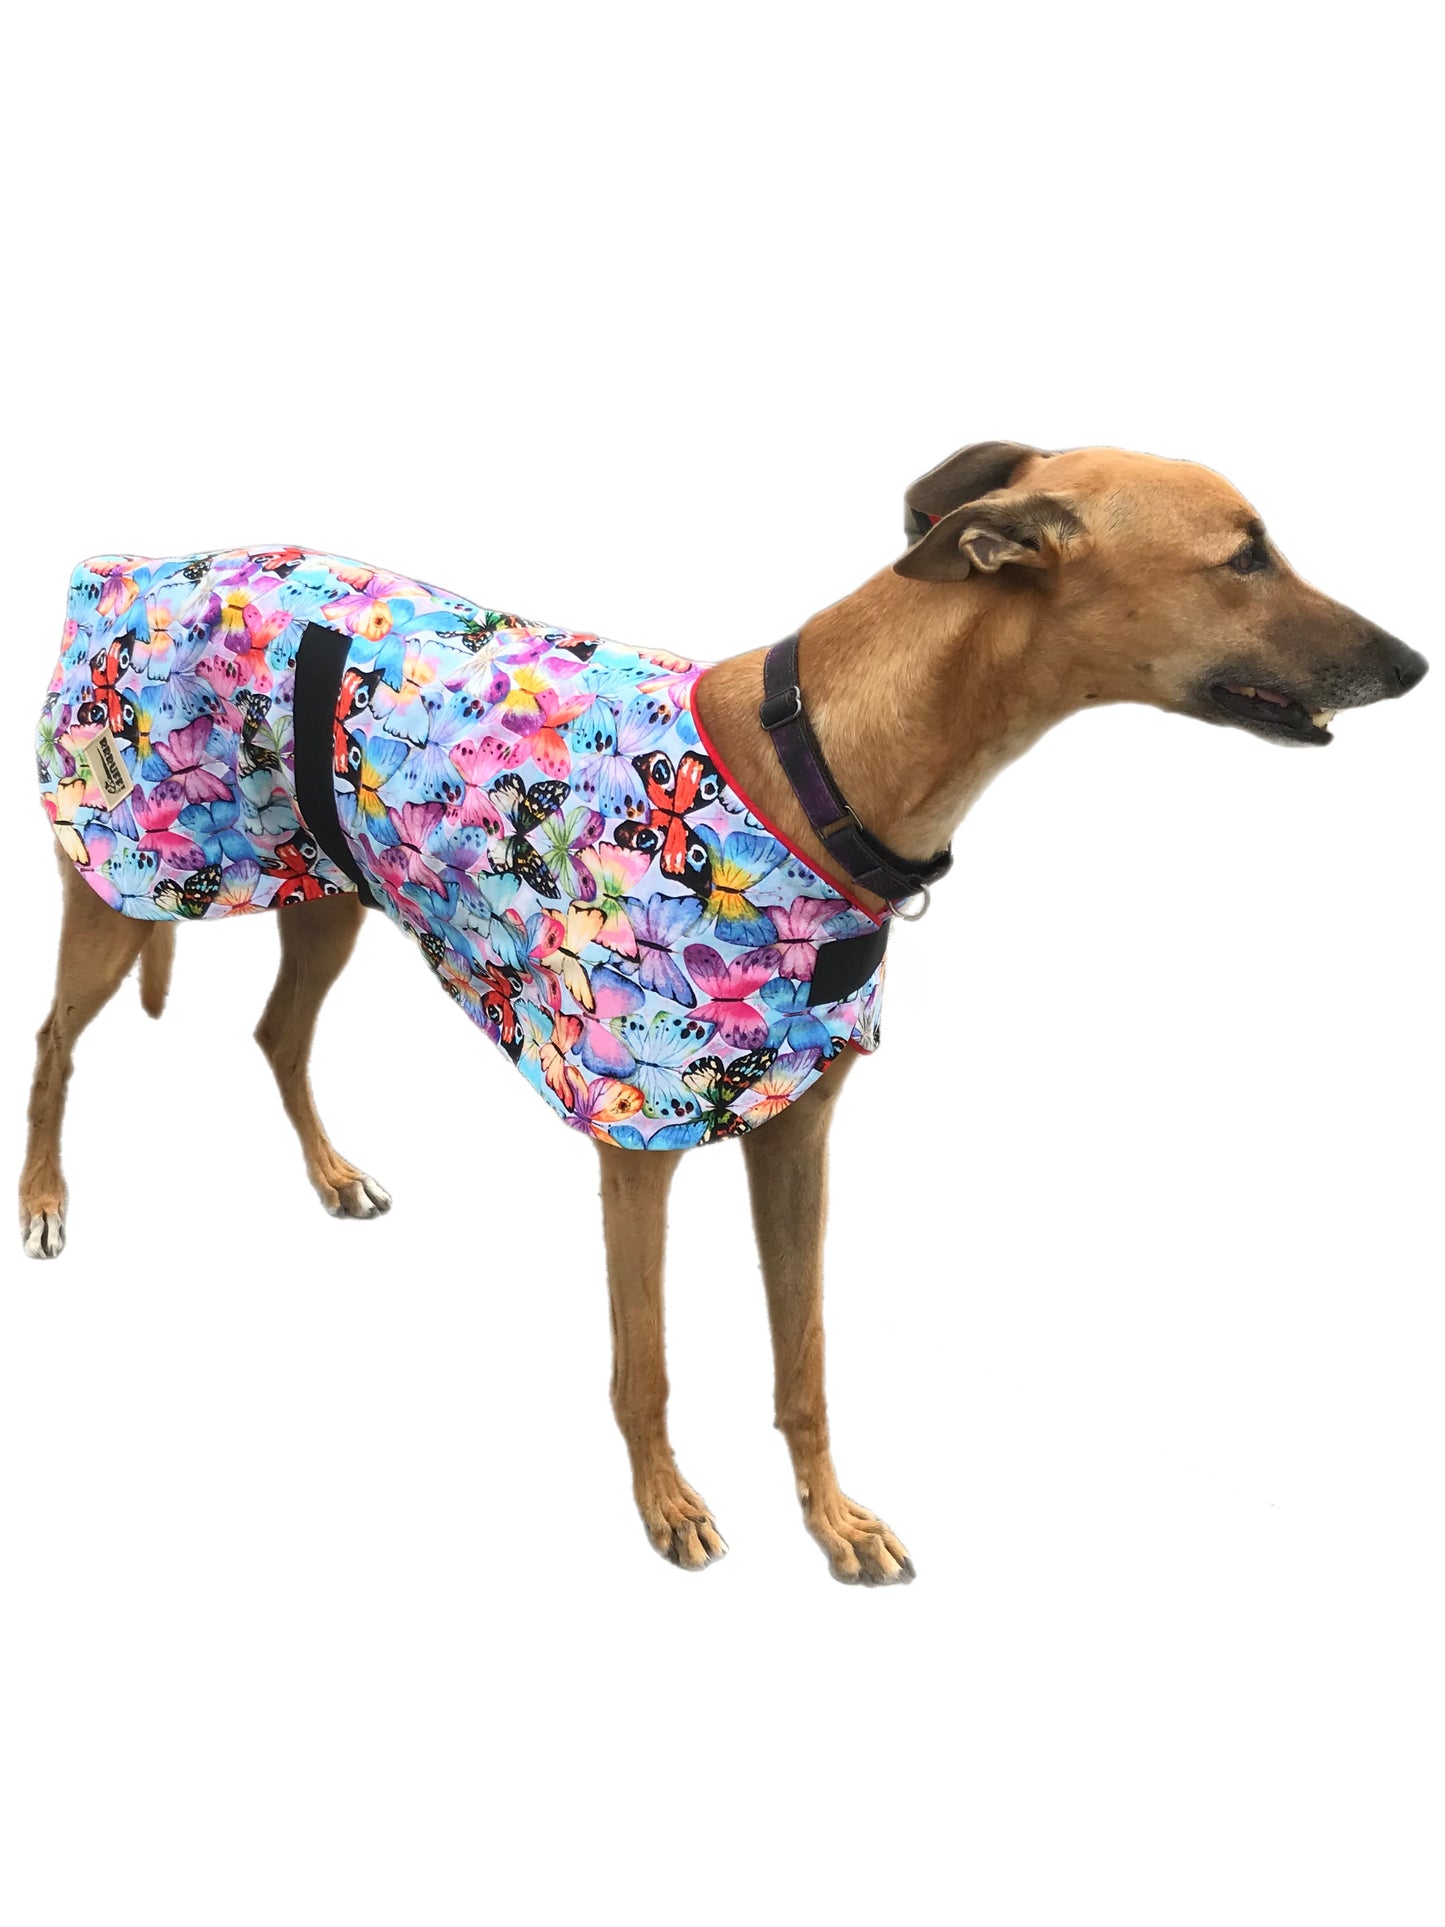 Summer/Autumn range classic style Greyhound ‘butterflies’ design in cotton & thin fleece washable